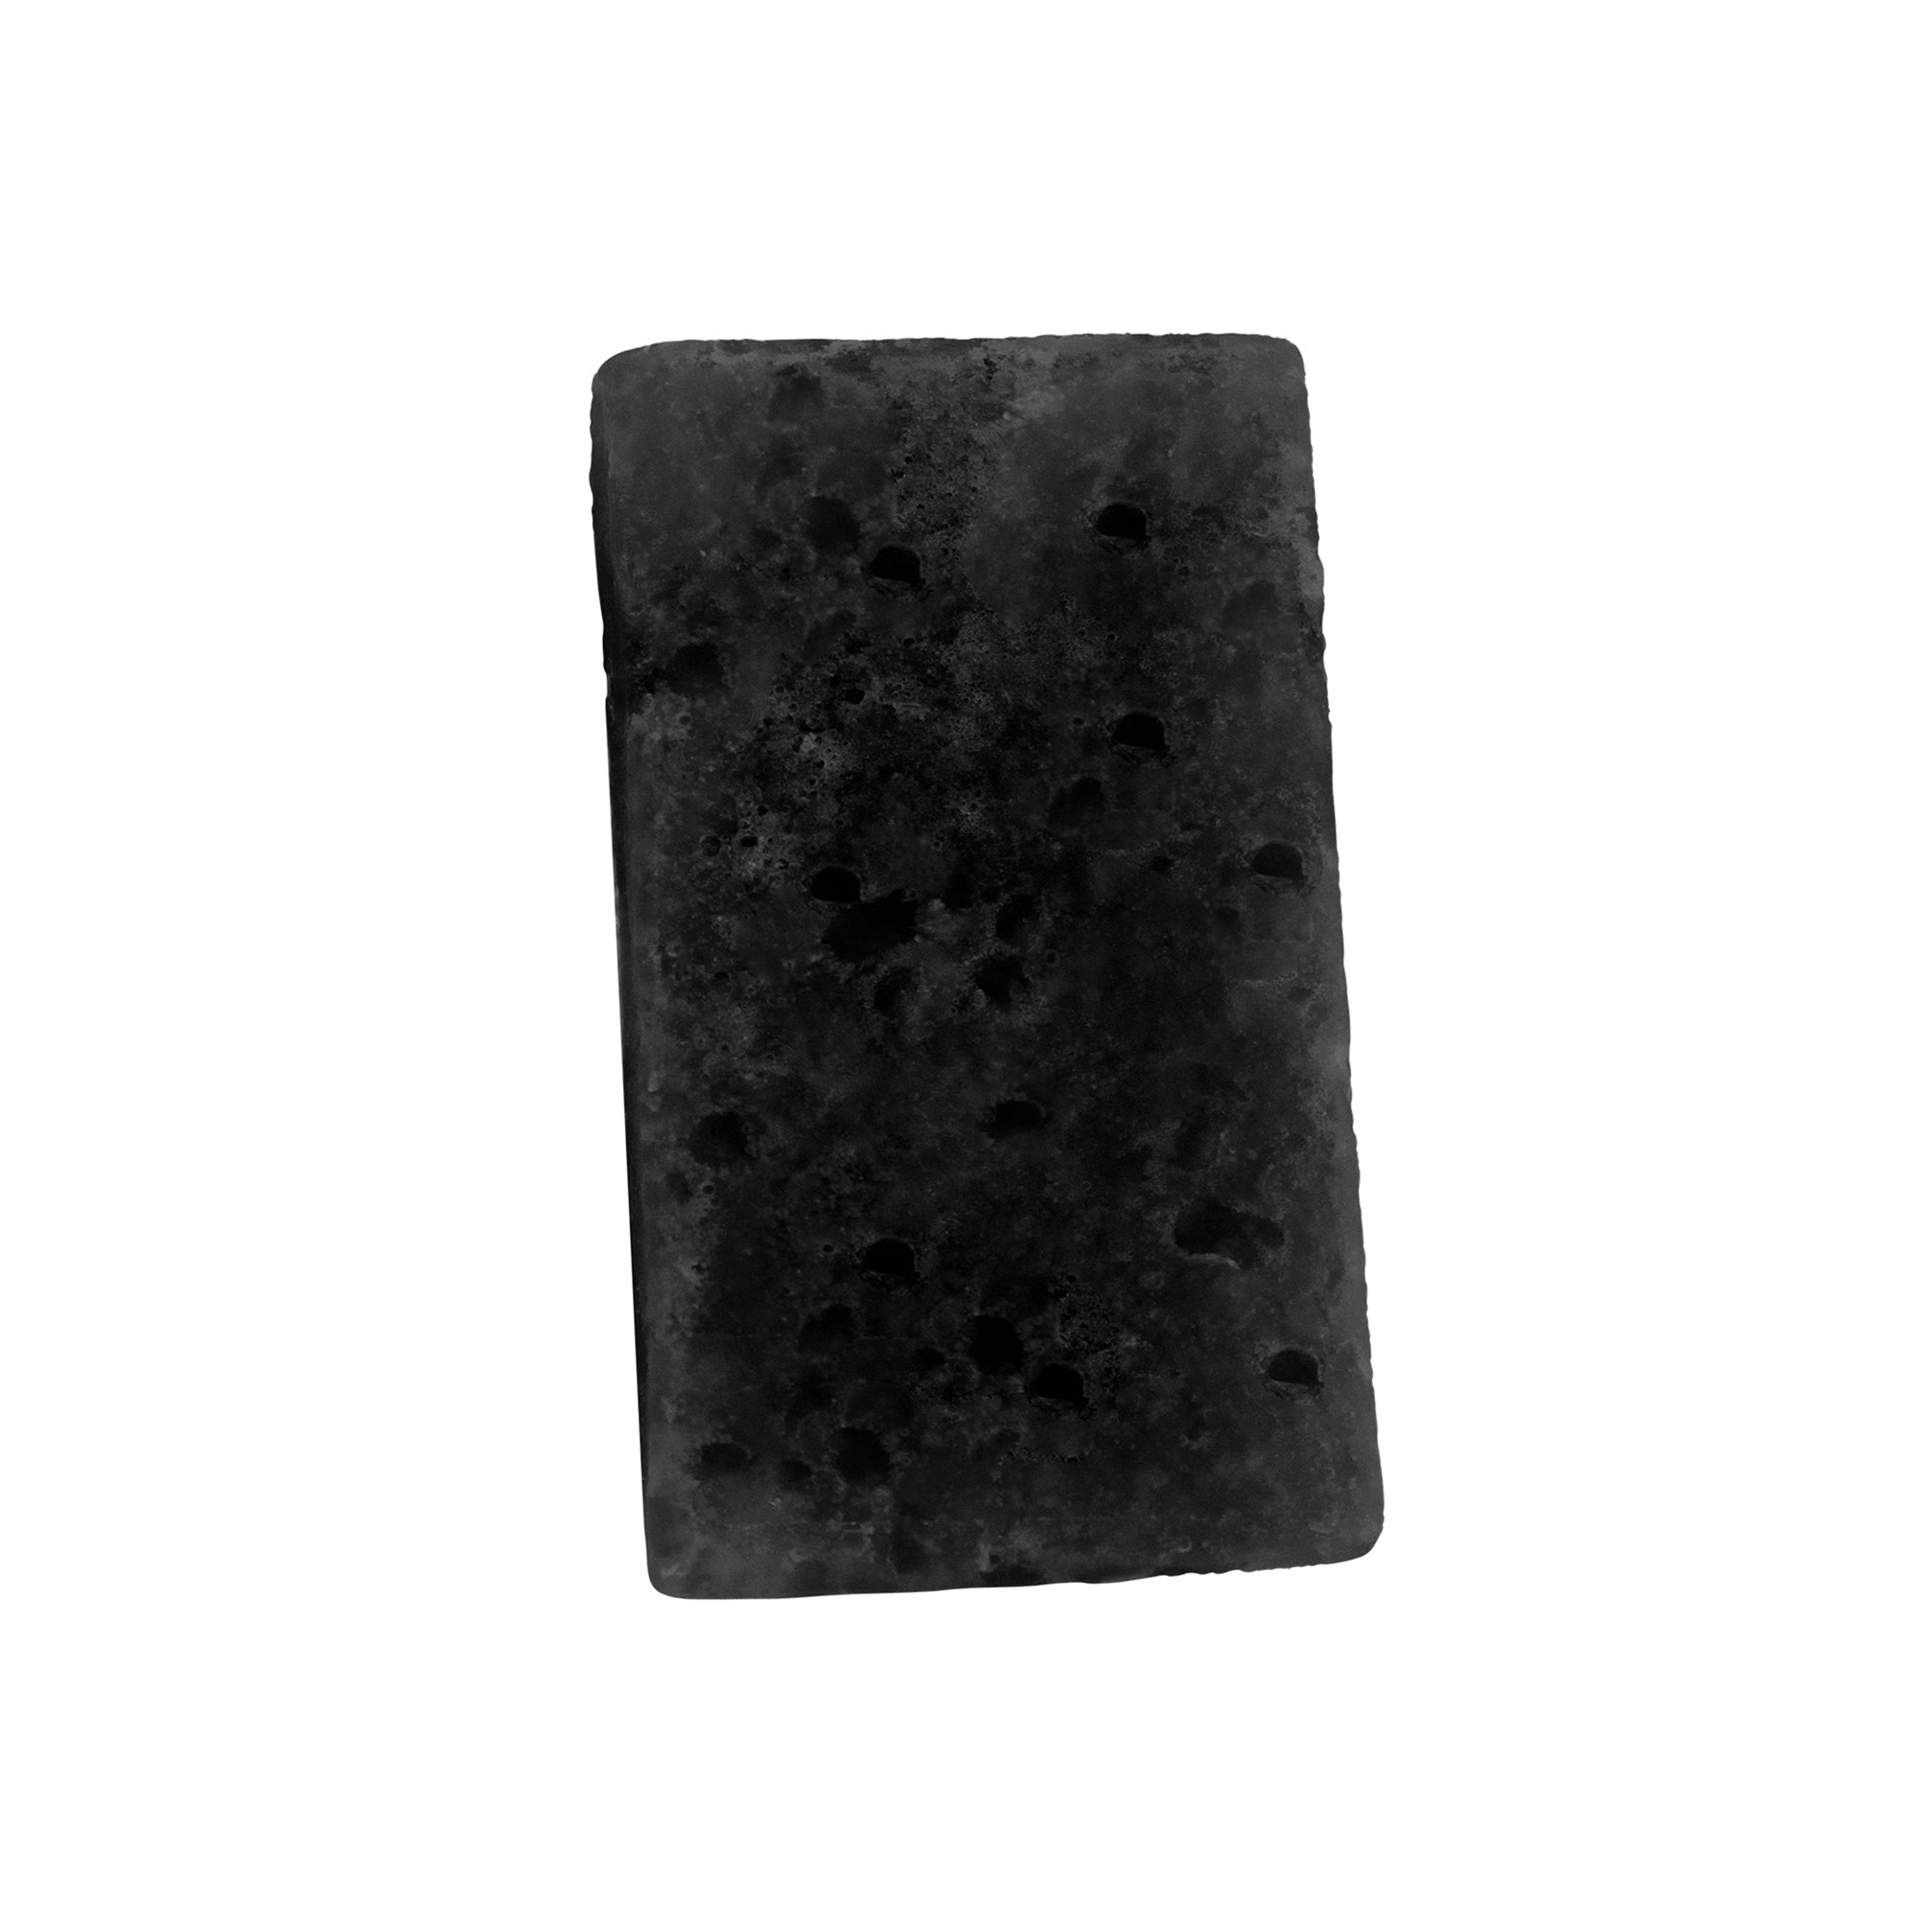 Daily Concepts + Esponjabon Multi-Functional Soap Sponge Charcoal